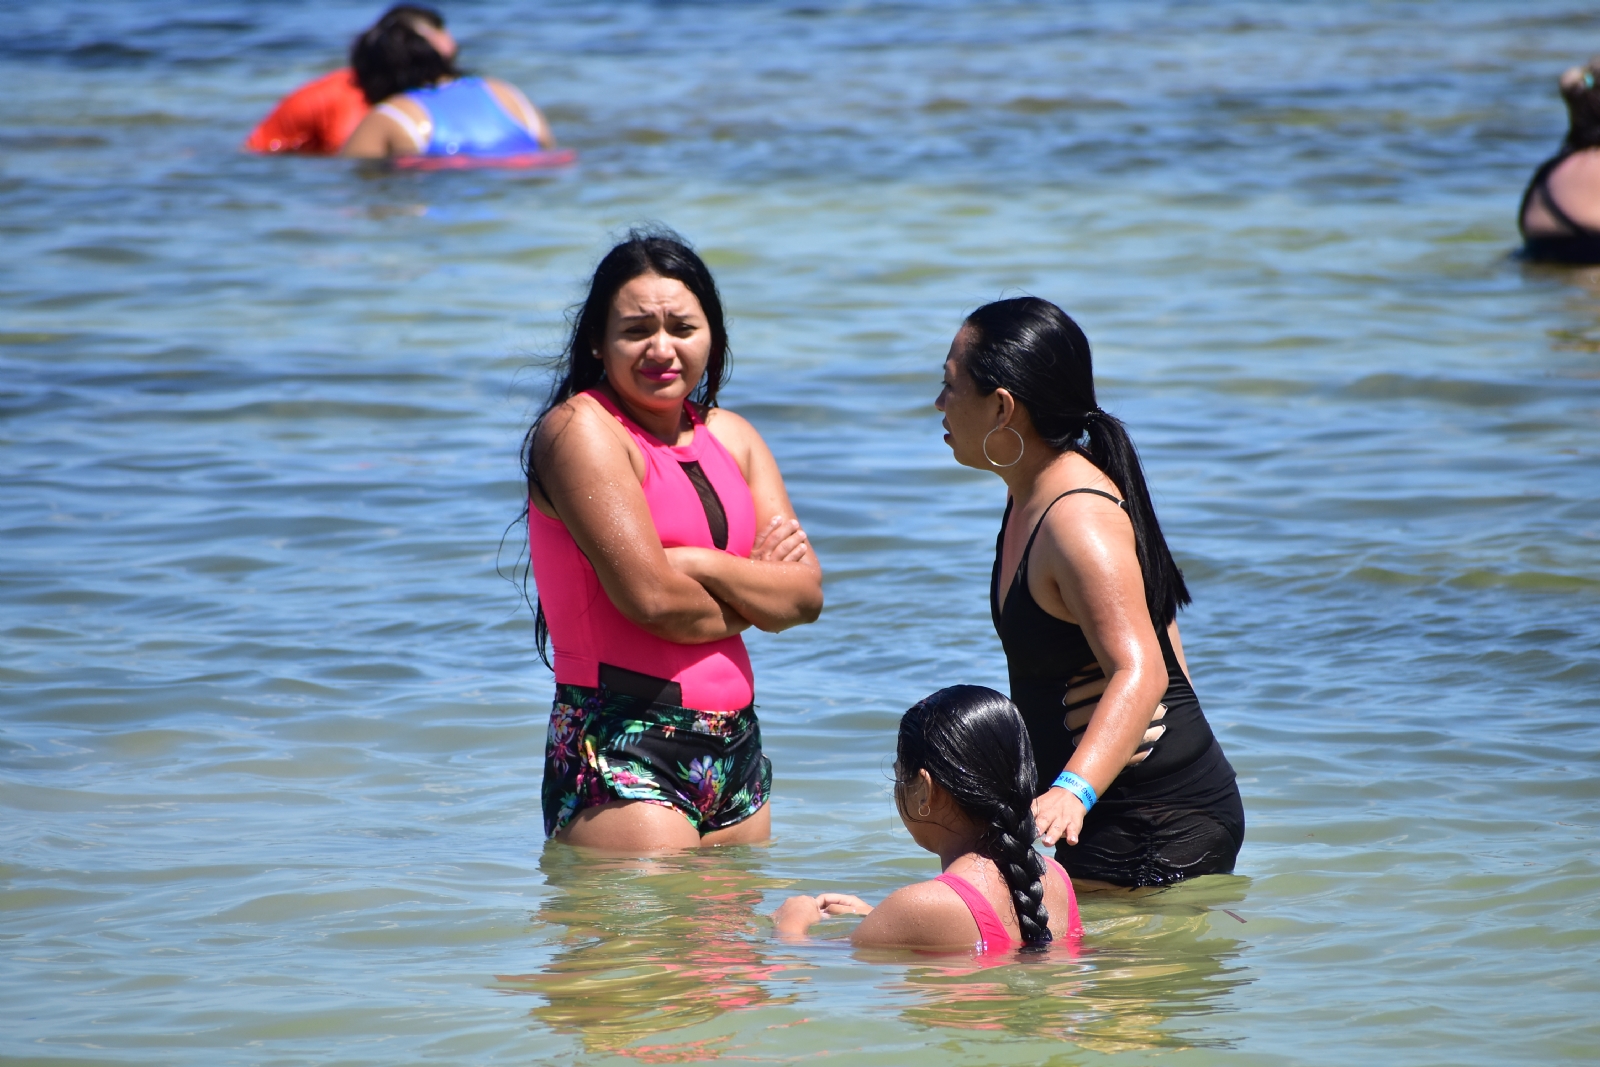 Playas en Campeche: 12 de 29 zonas están contaminadas; no son aptas para nadar